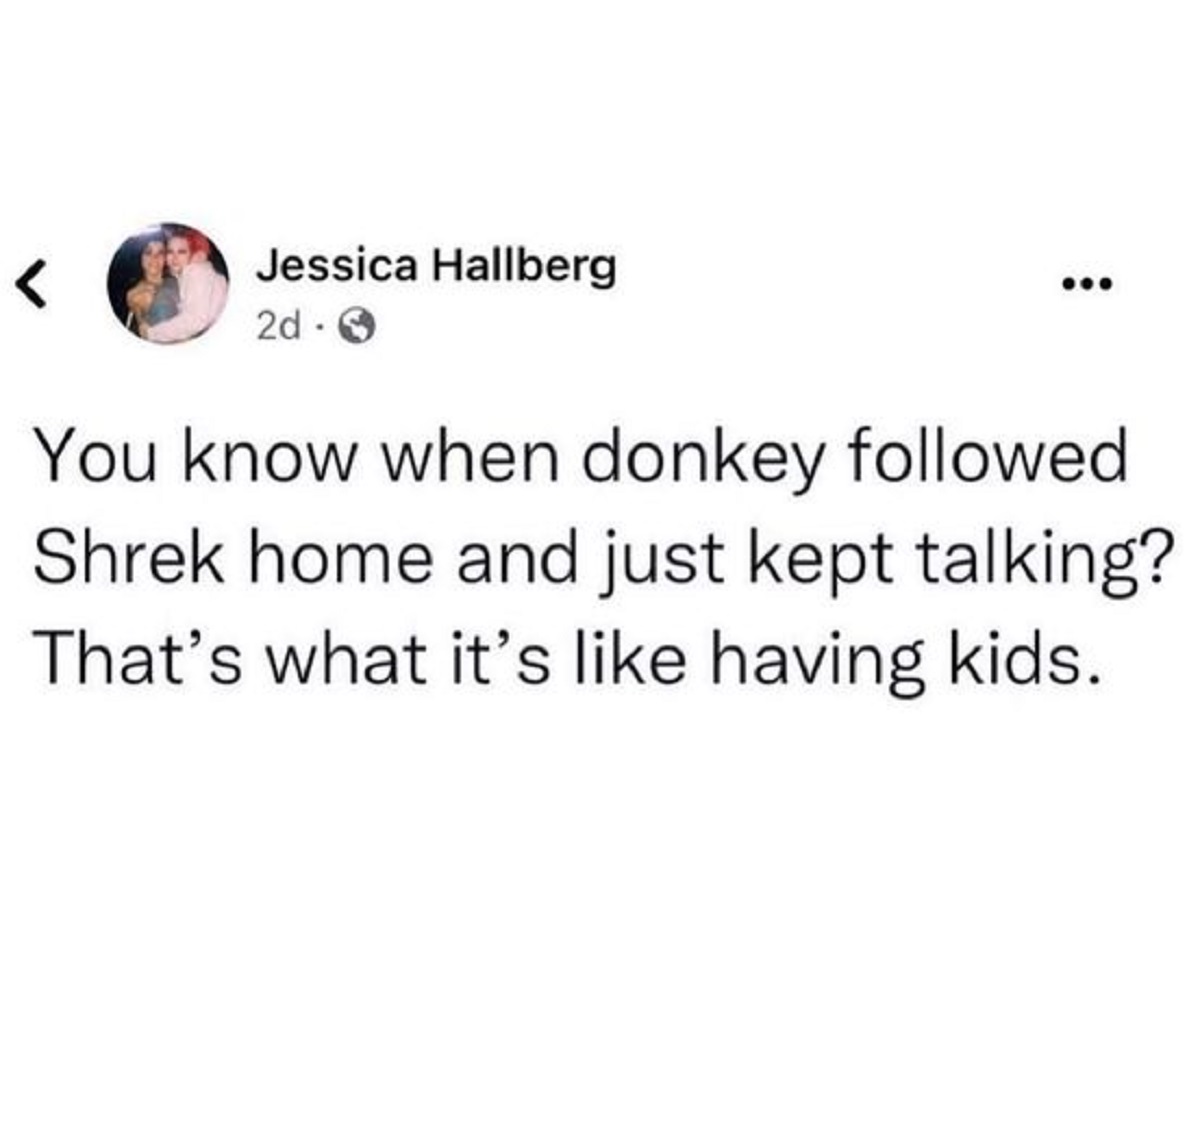 you know when donkey followed shrek - Jessica Hallberg 2d You know when donkey ed Shrek home and just kept talking? That's what it's having kids.